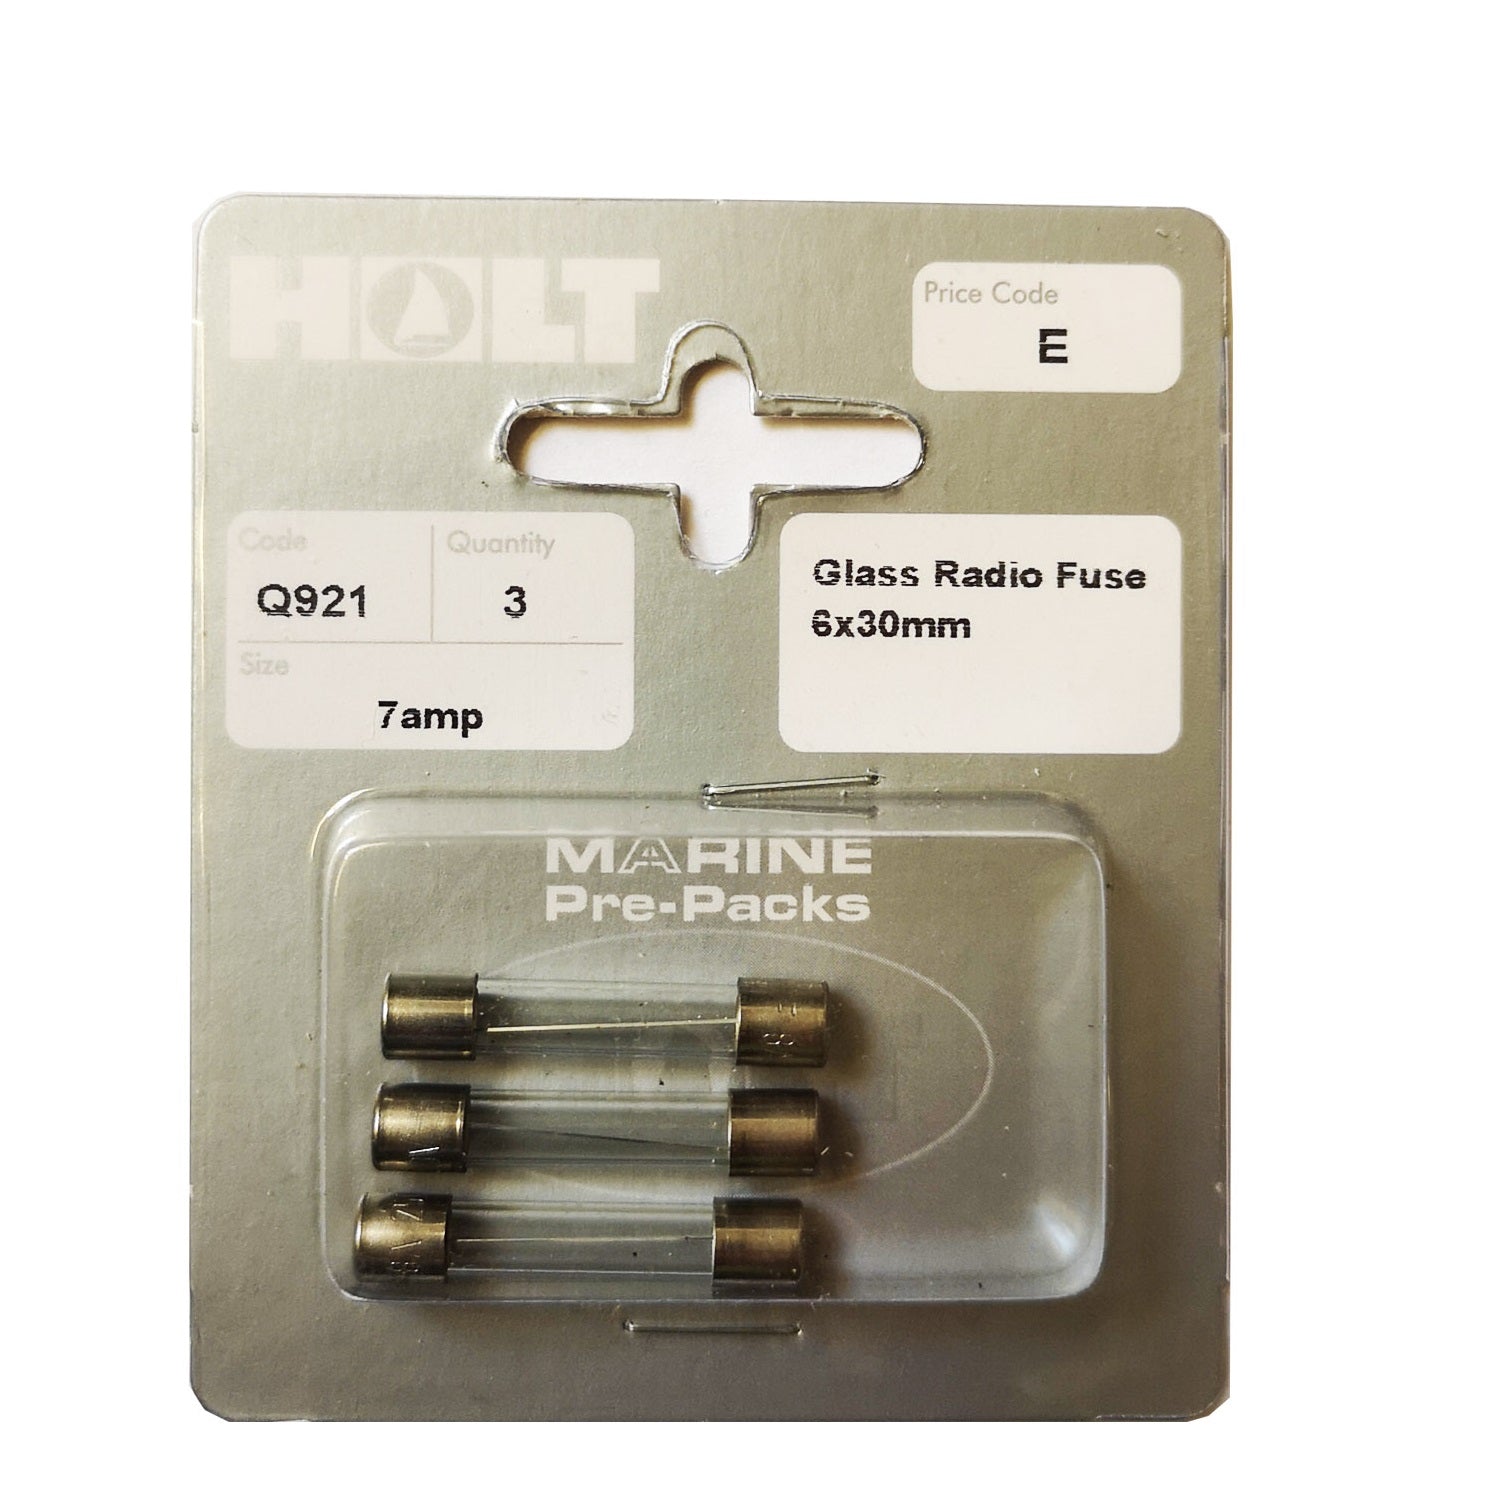 Holt Marine Q921 Glass Radio Fuse Pkt3 - 7amp - Premium Fuses from Holt Marine - Just $6.5! Shop now at W Hurst & Son (IW) Ltd